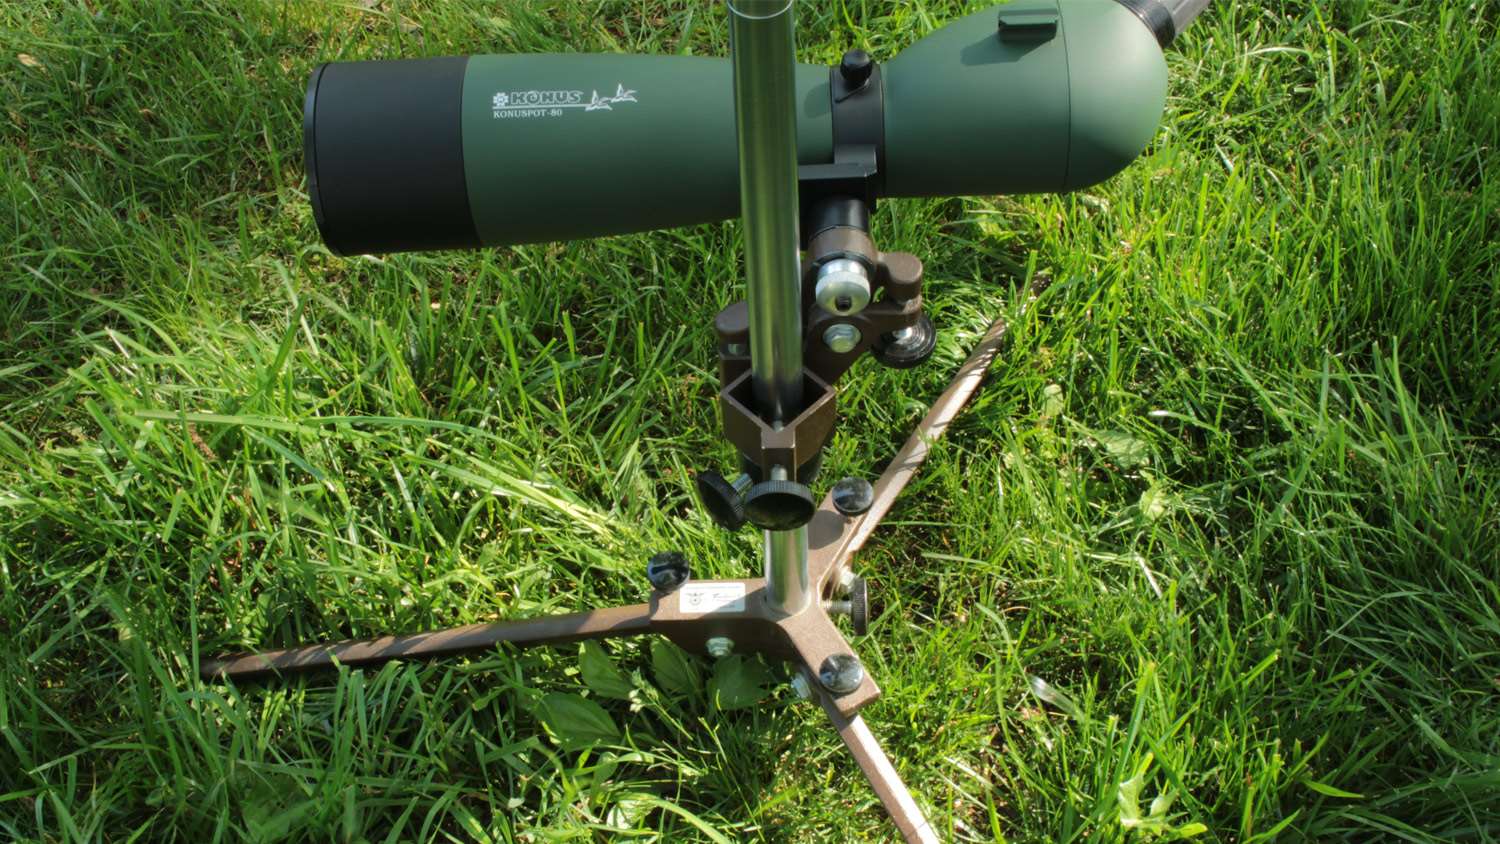 Konus spotting scope for high power service rifle